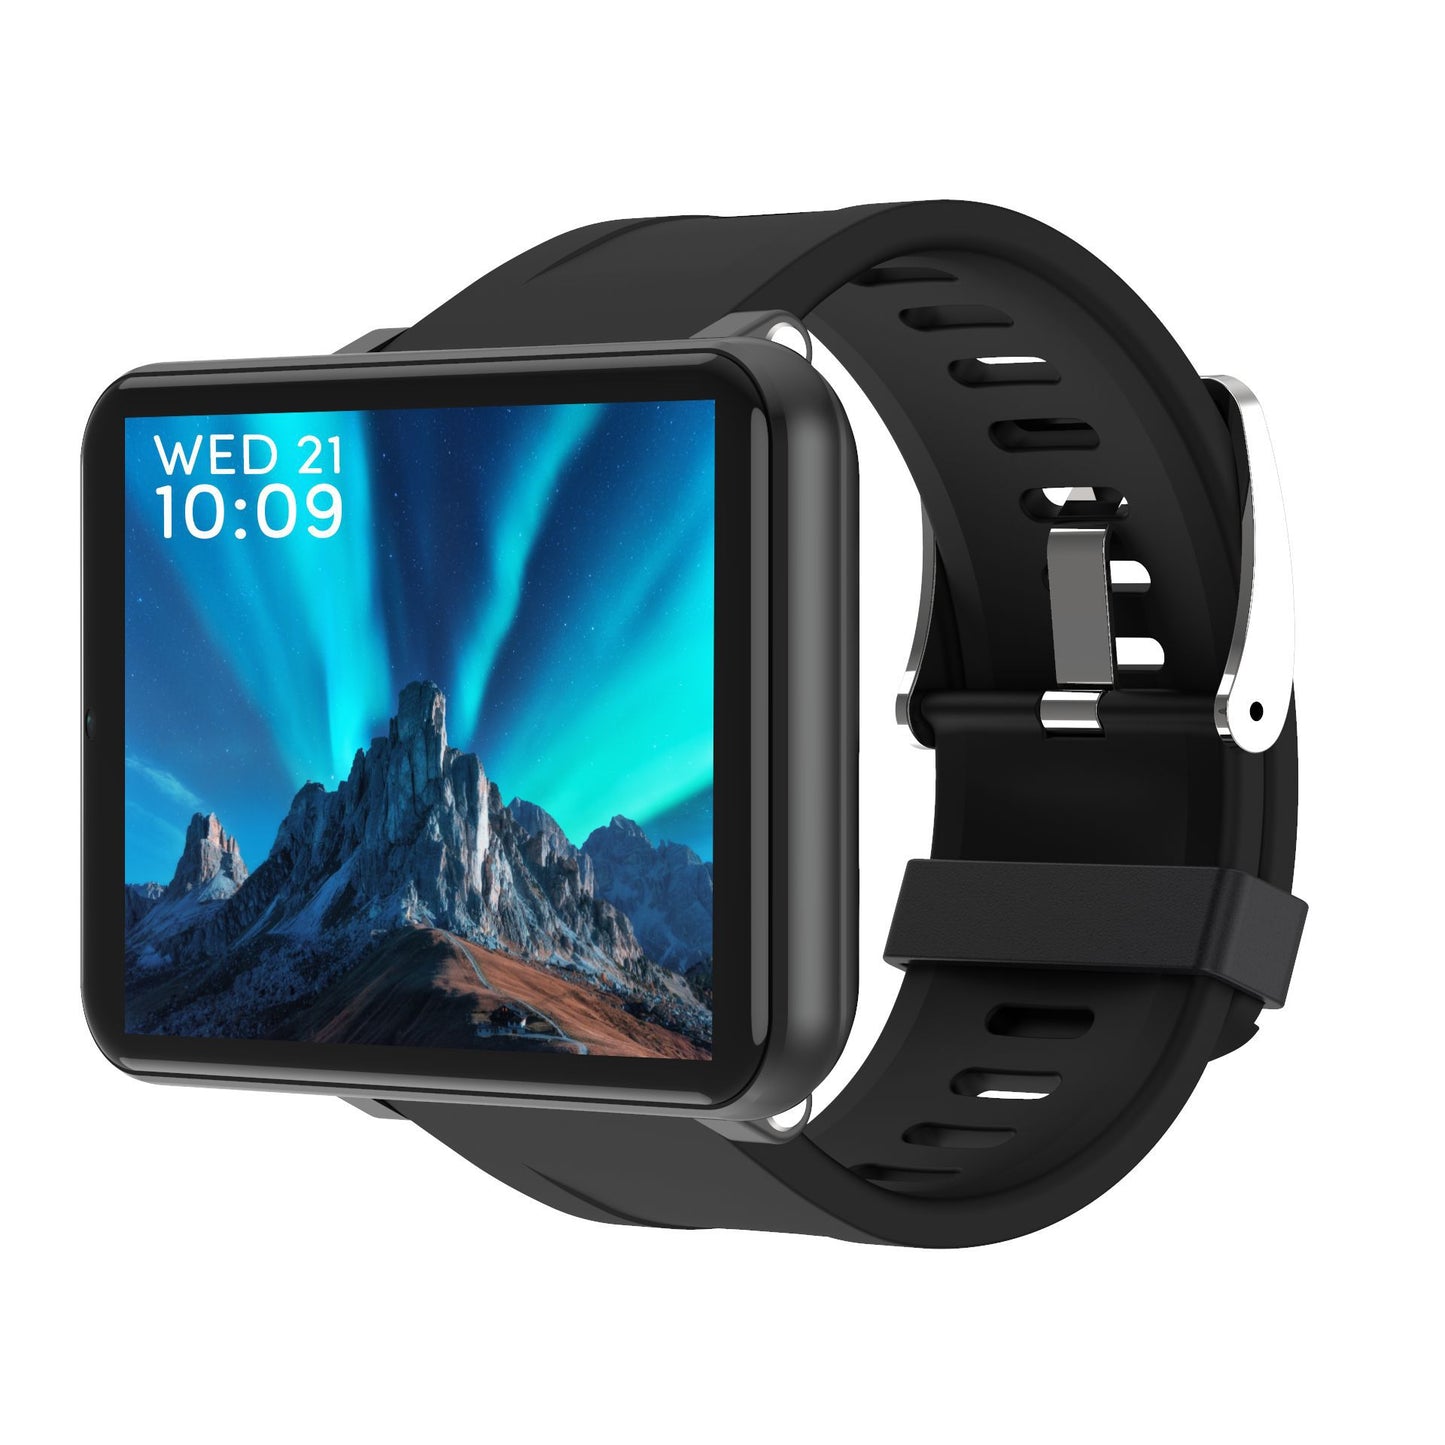 Big screen smart watch